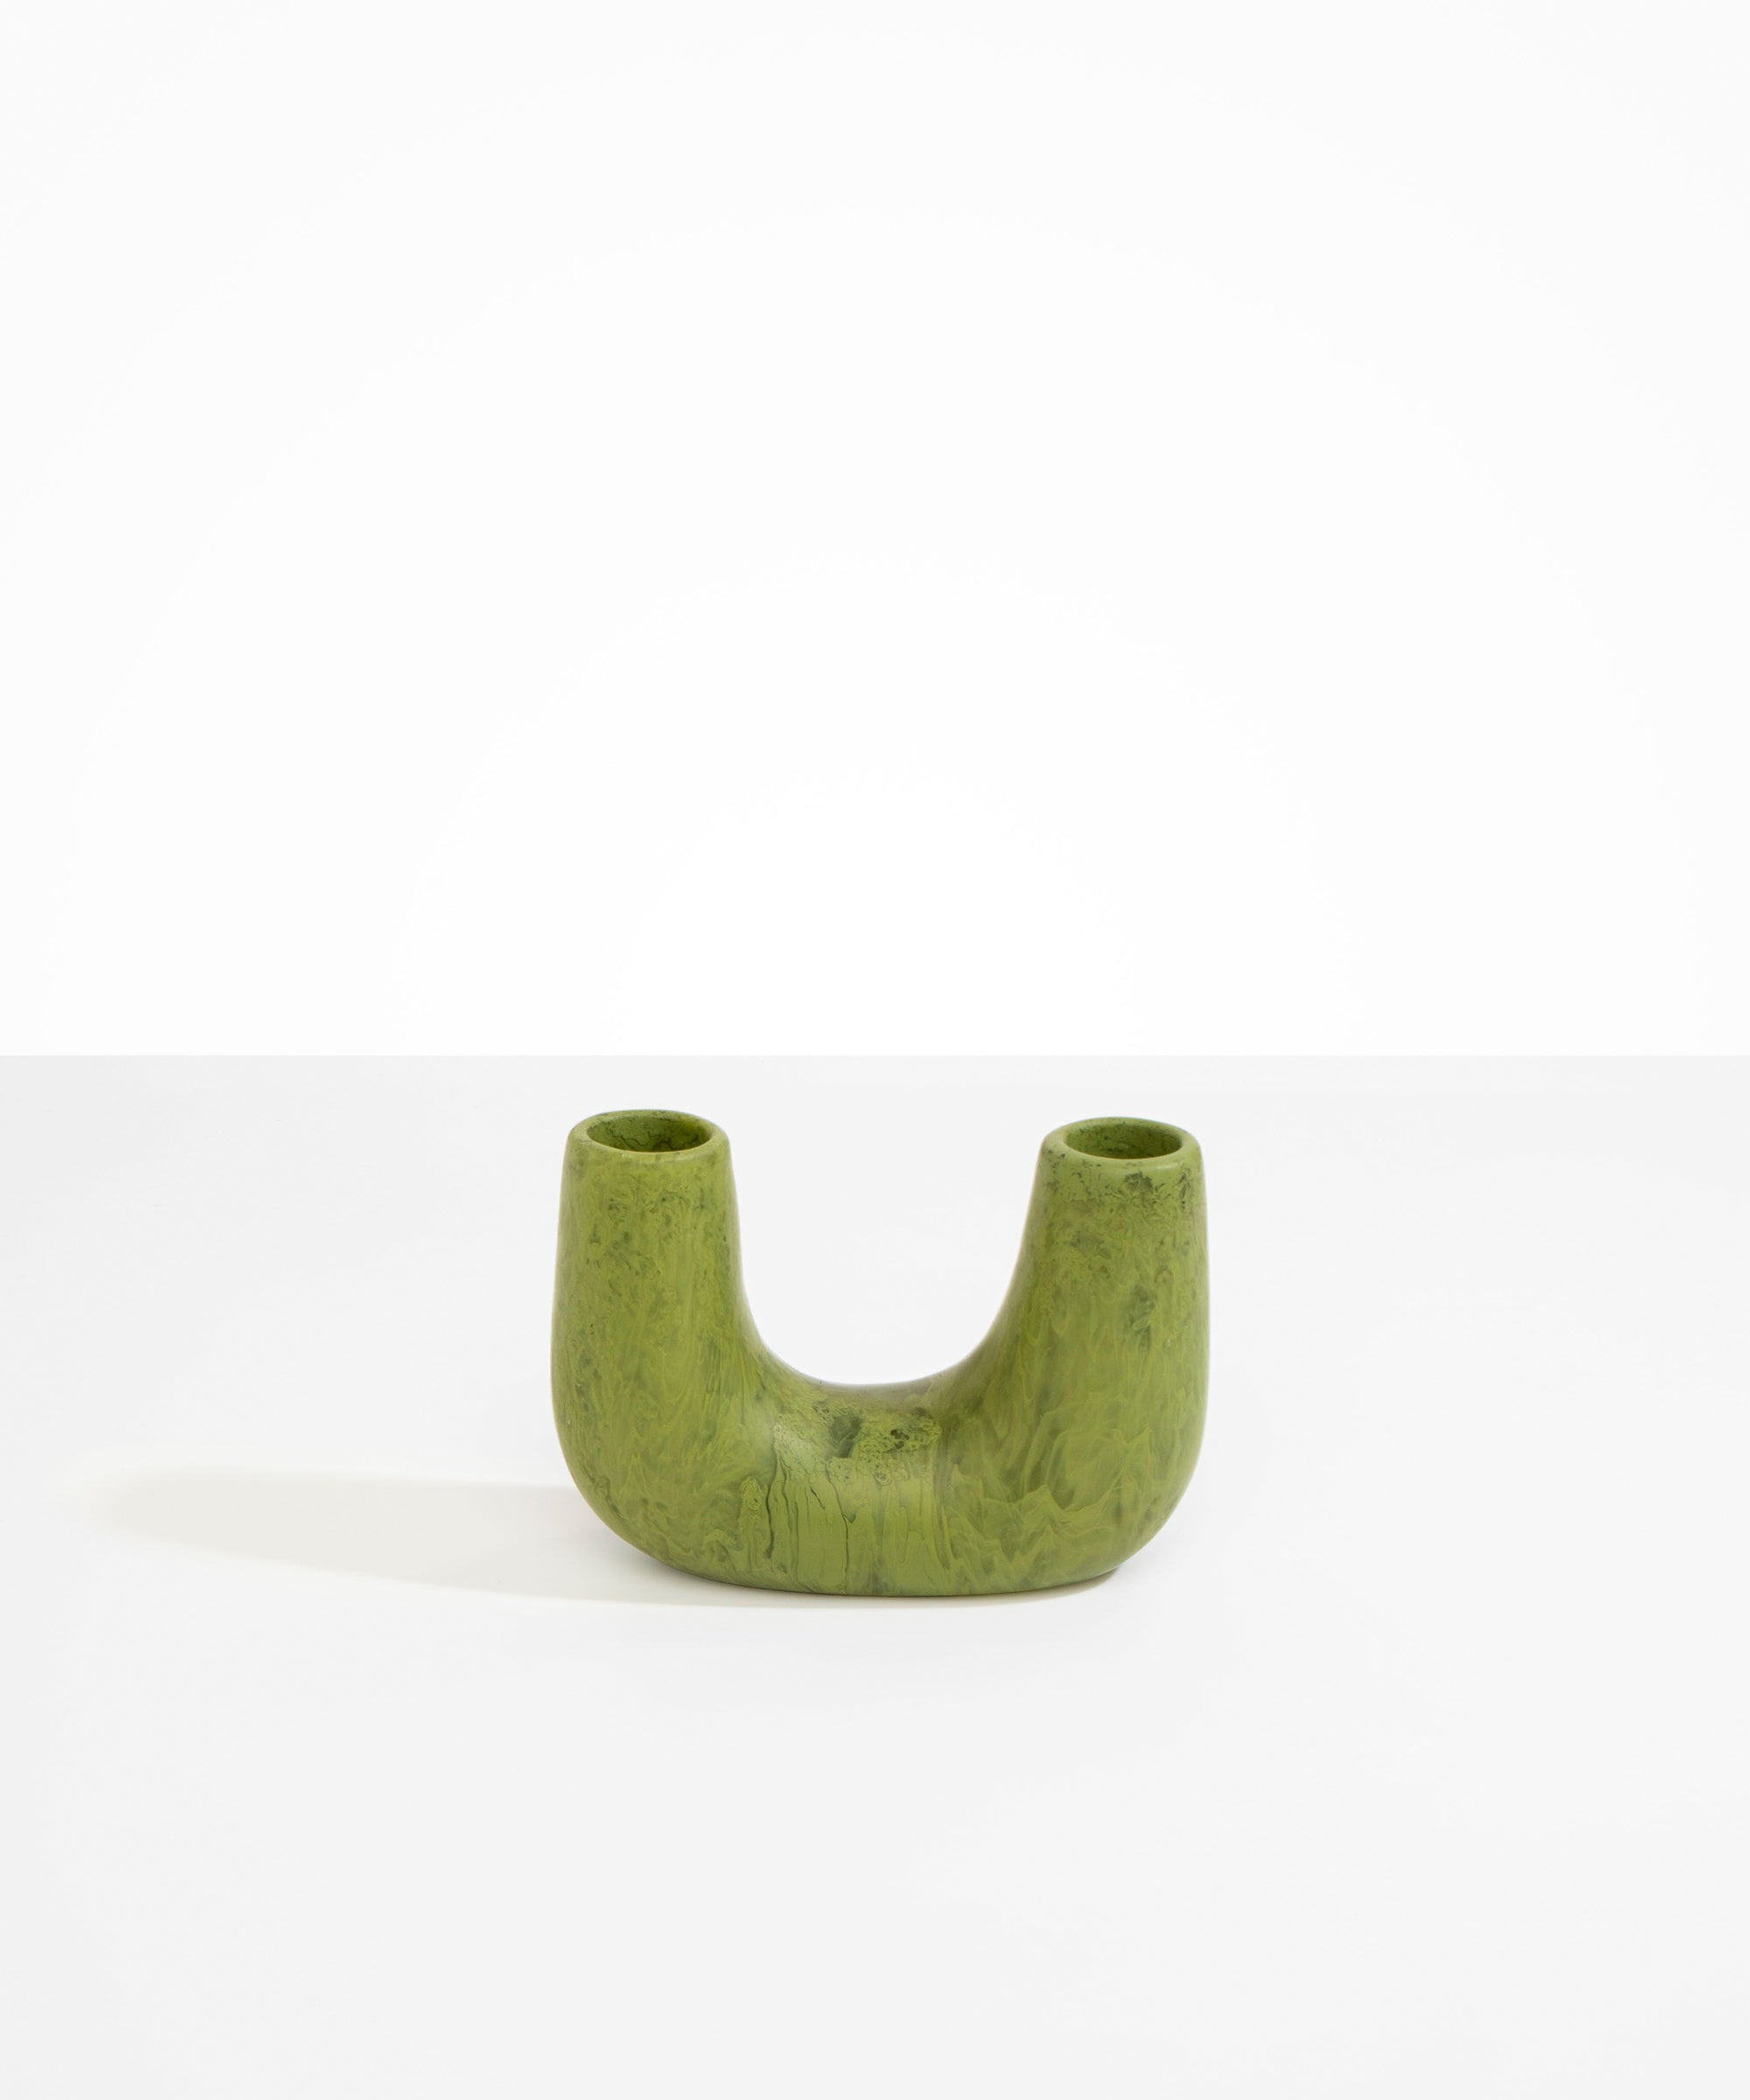 Dinosaur Designs Small Branch Vase Vases in Olive color resin